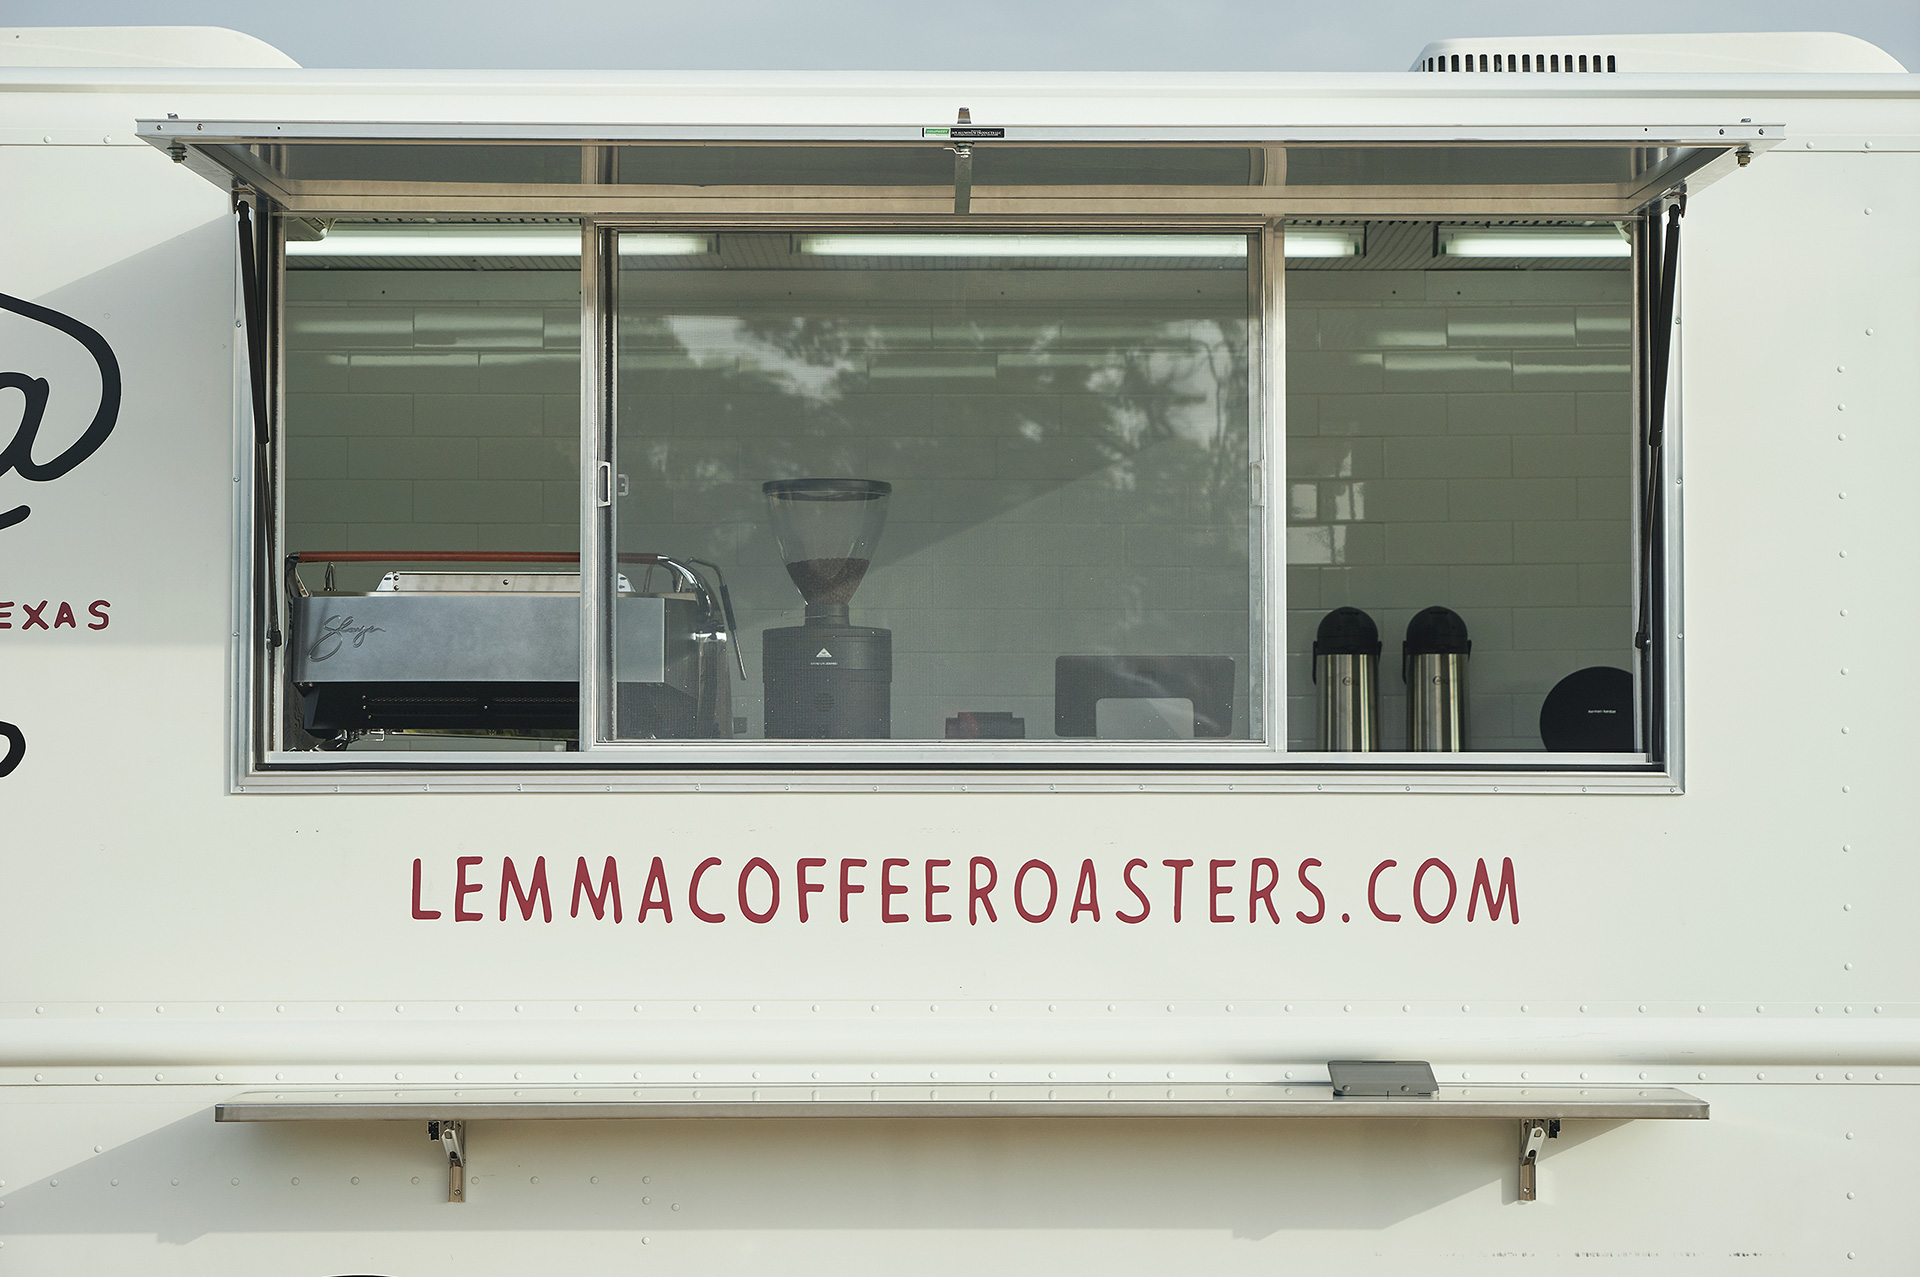 lemma coffee roasters denton texas